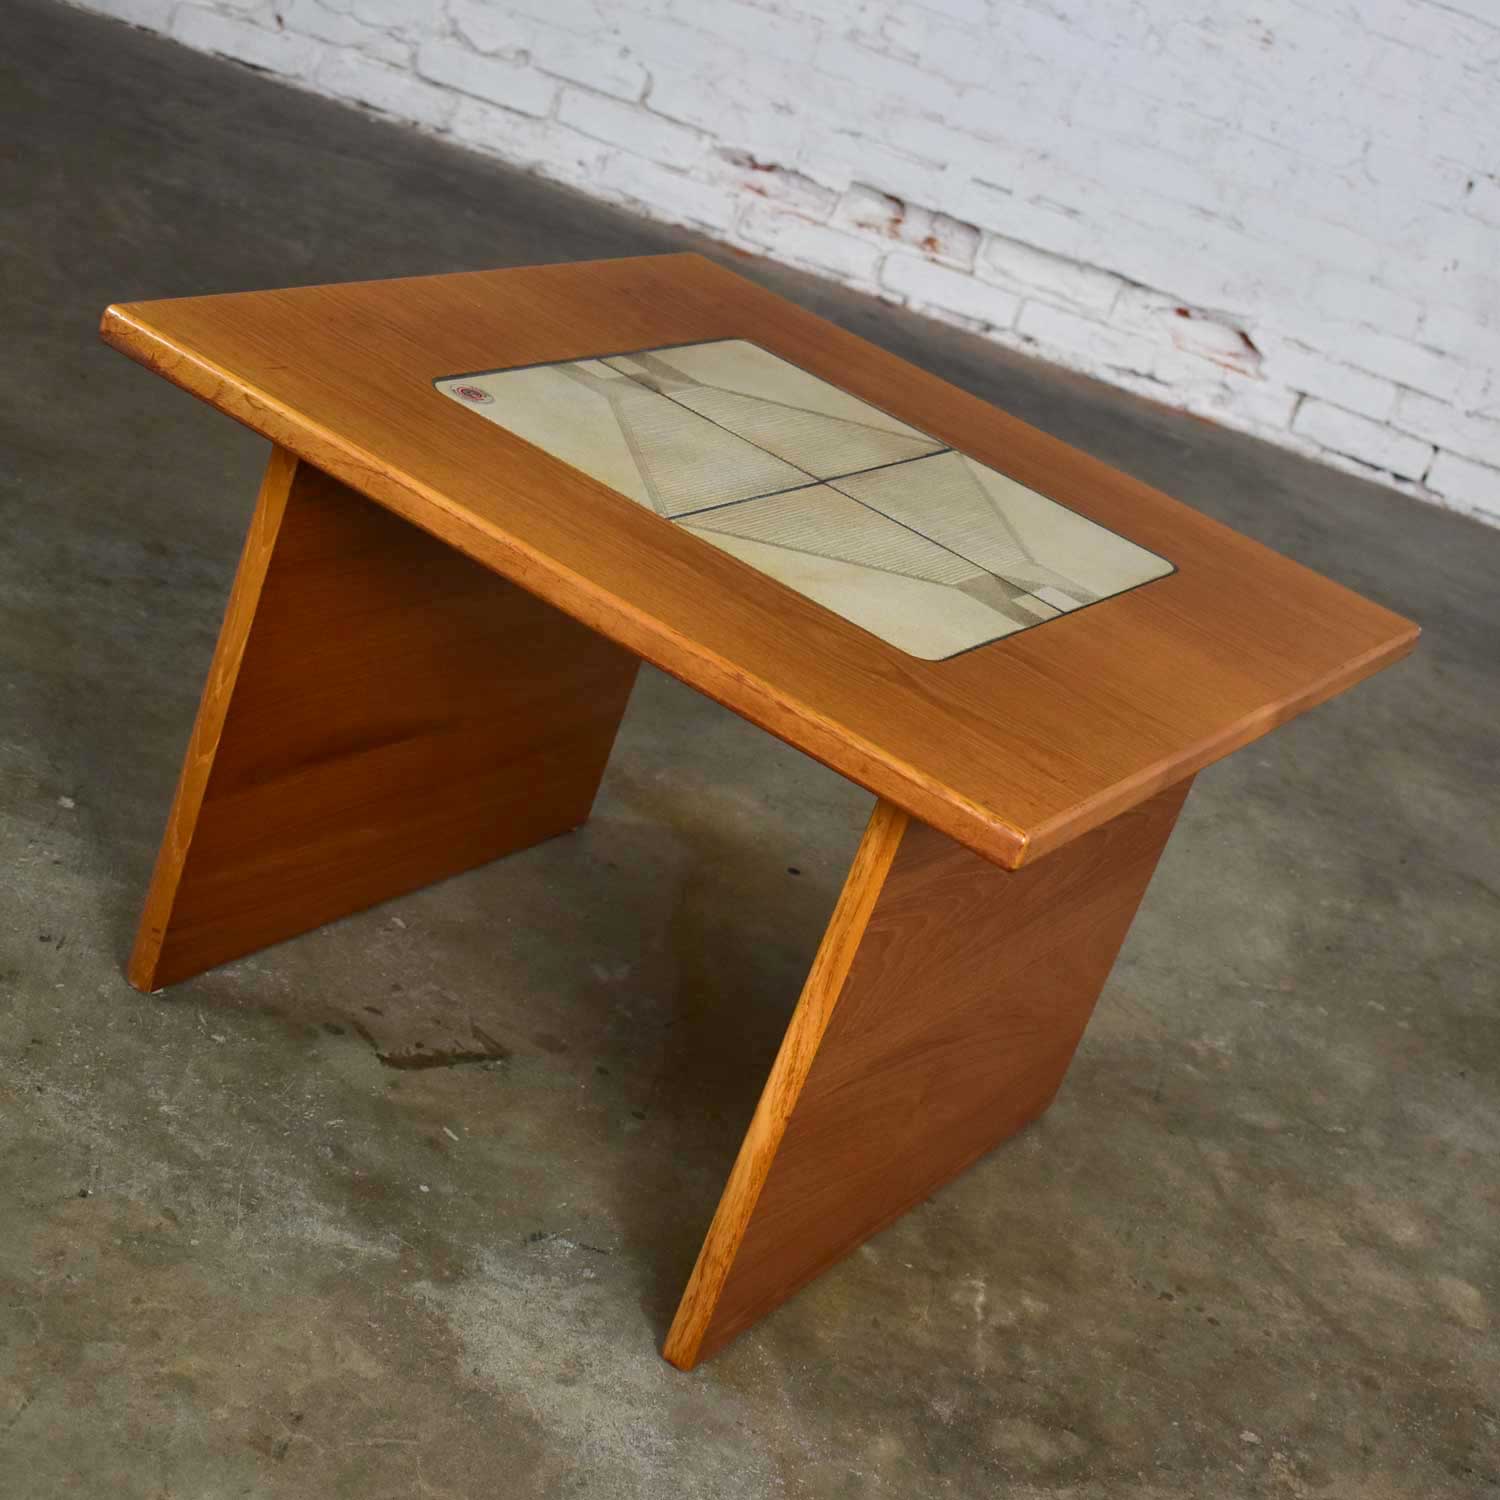 MCM Scandinavian Teak Side Table or End Table with Tile Insert by Poul H. Poulsen for Gangso Mobler